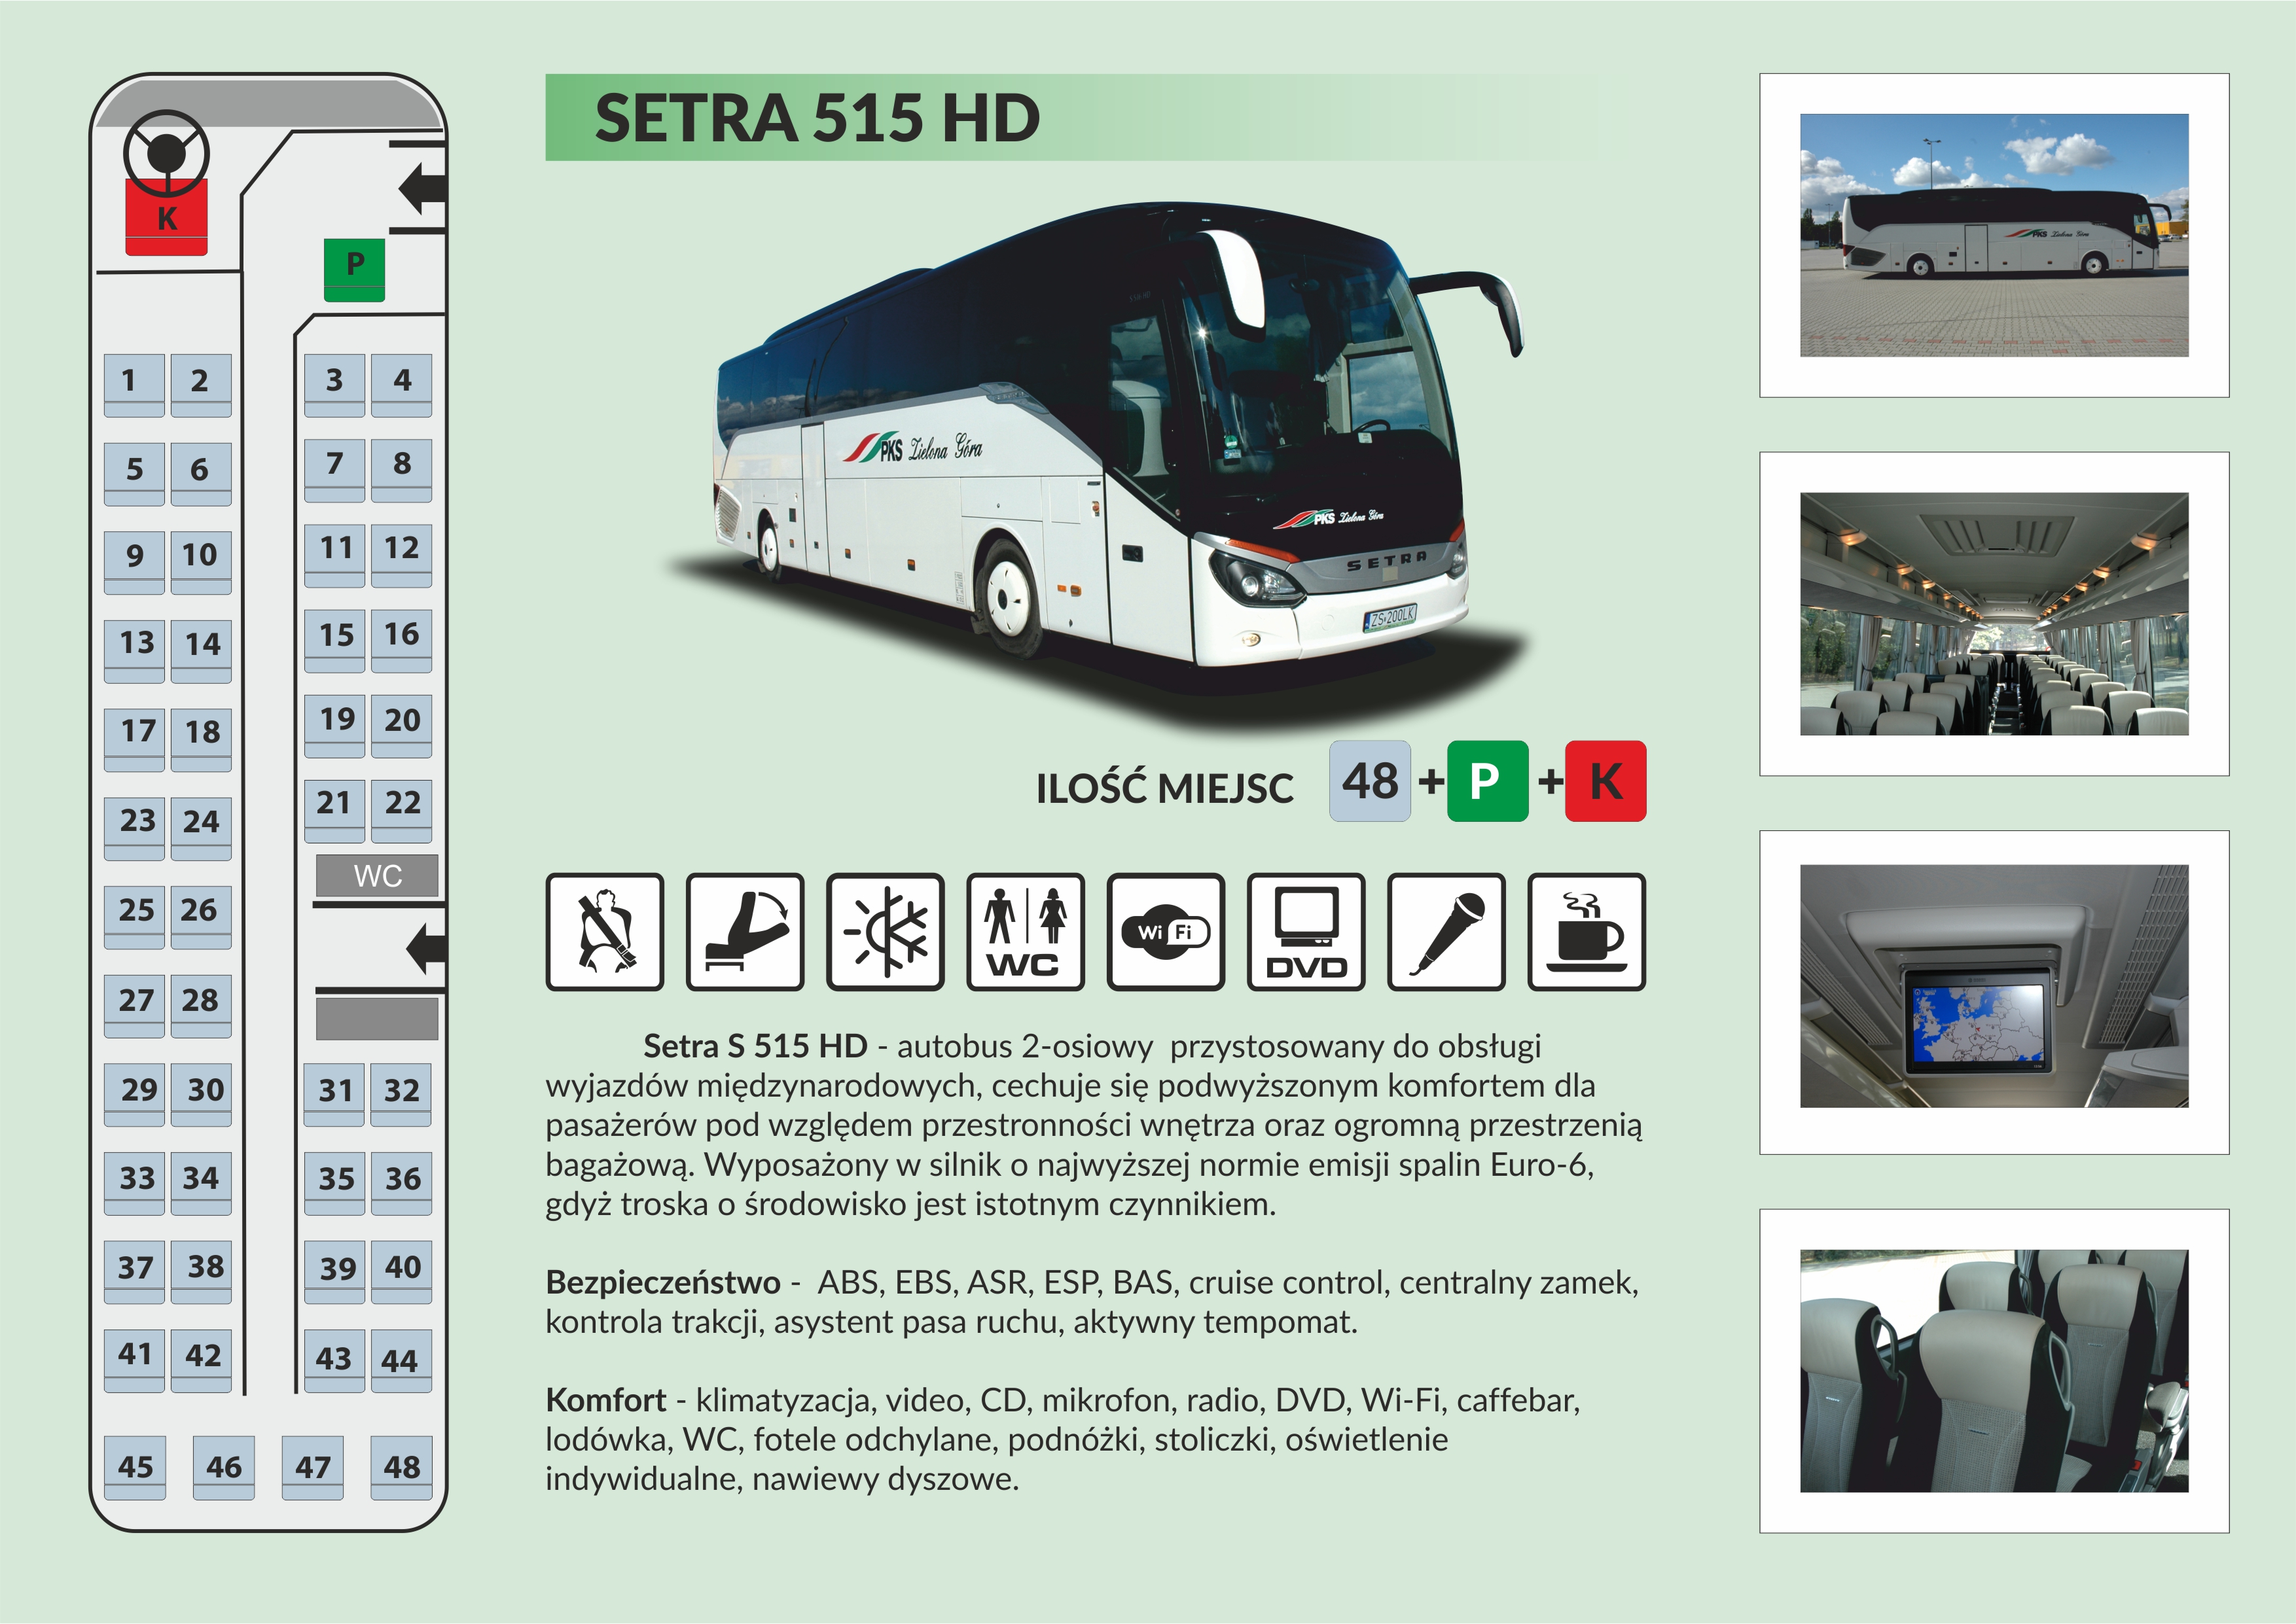 SETRA 515 HD